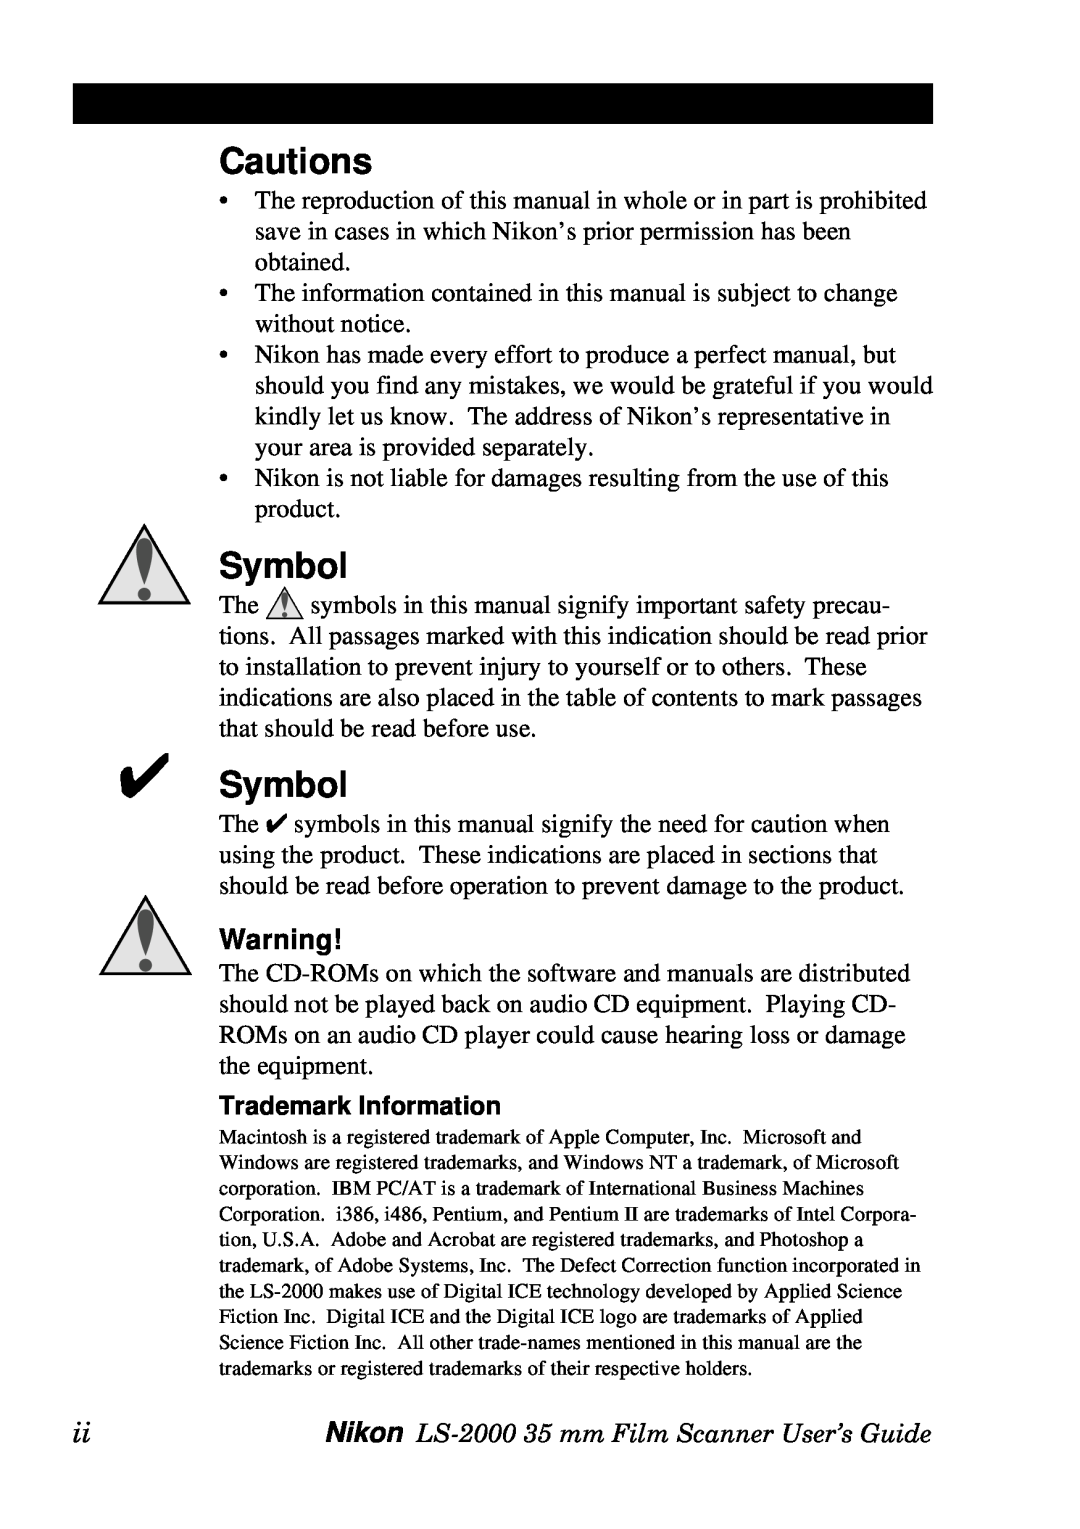 Nikon LS-2000 manual Cautions, Symbol, Trademark Information 